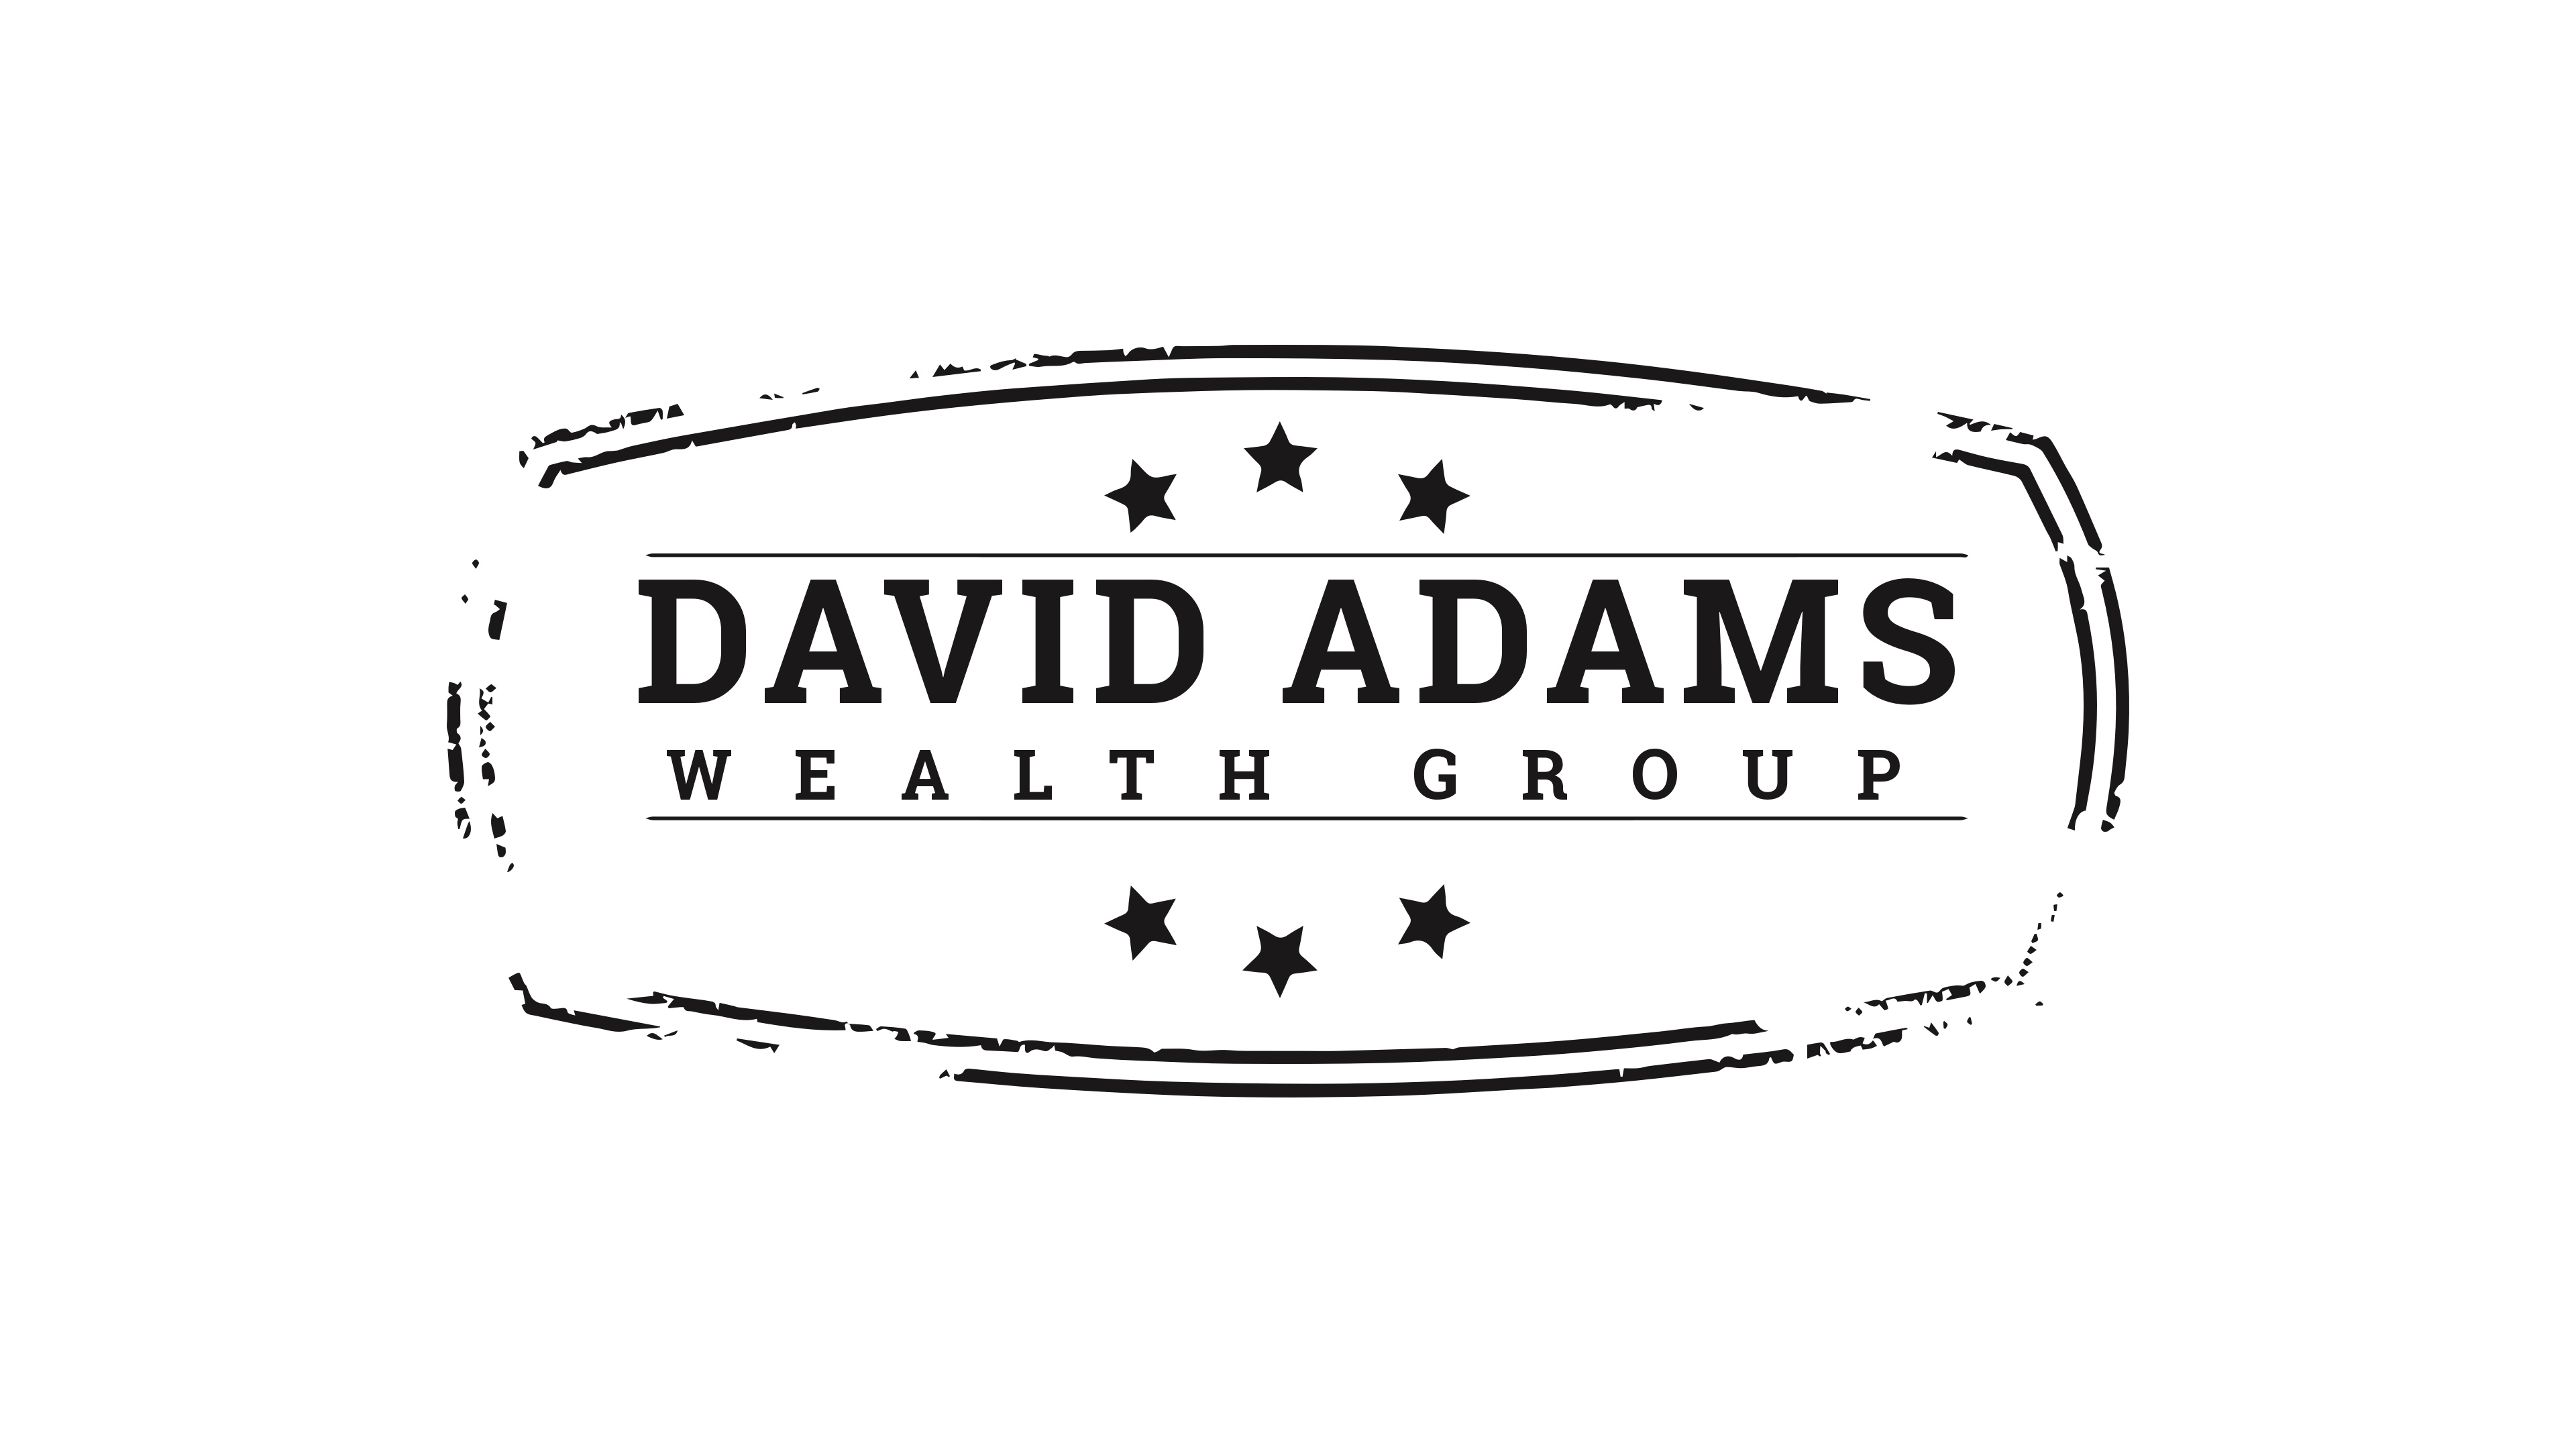 5. David Adams Wealth Group